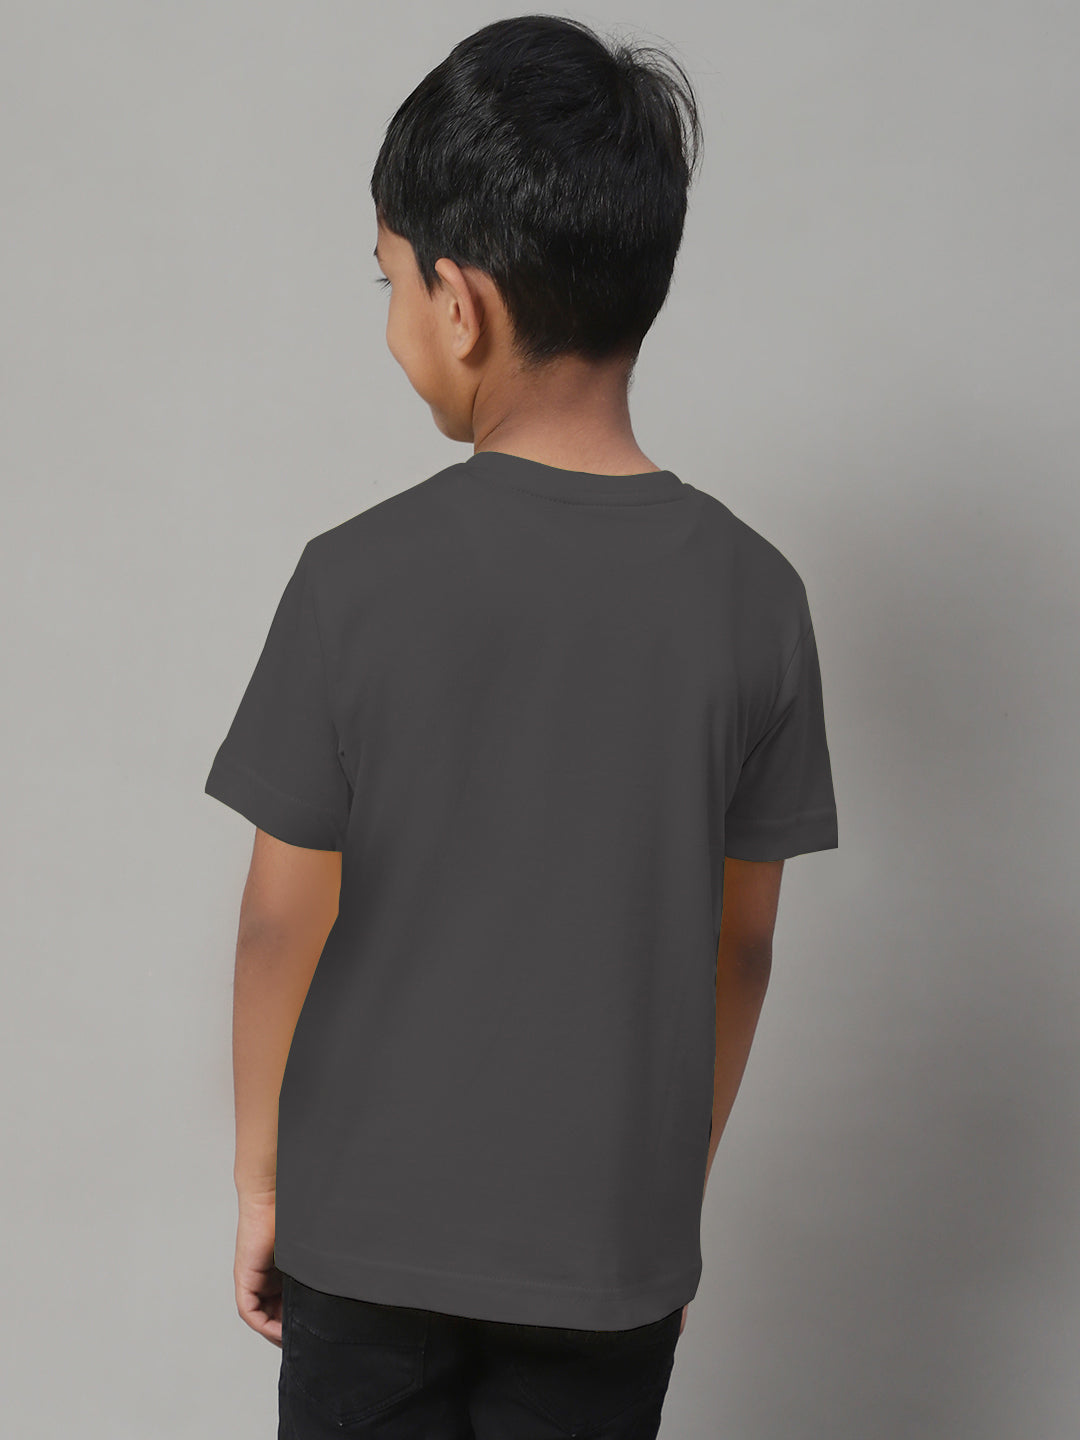 Boys Go Half Sleeves Printed T-Shirt - Friskers